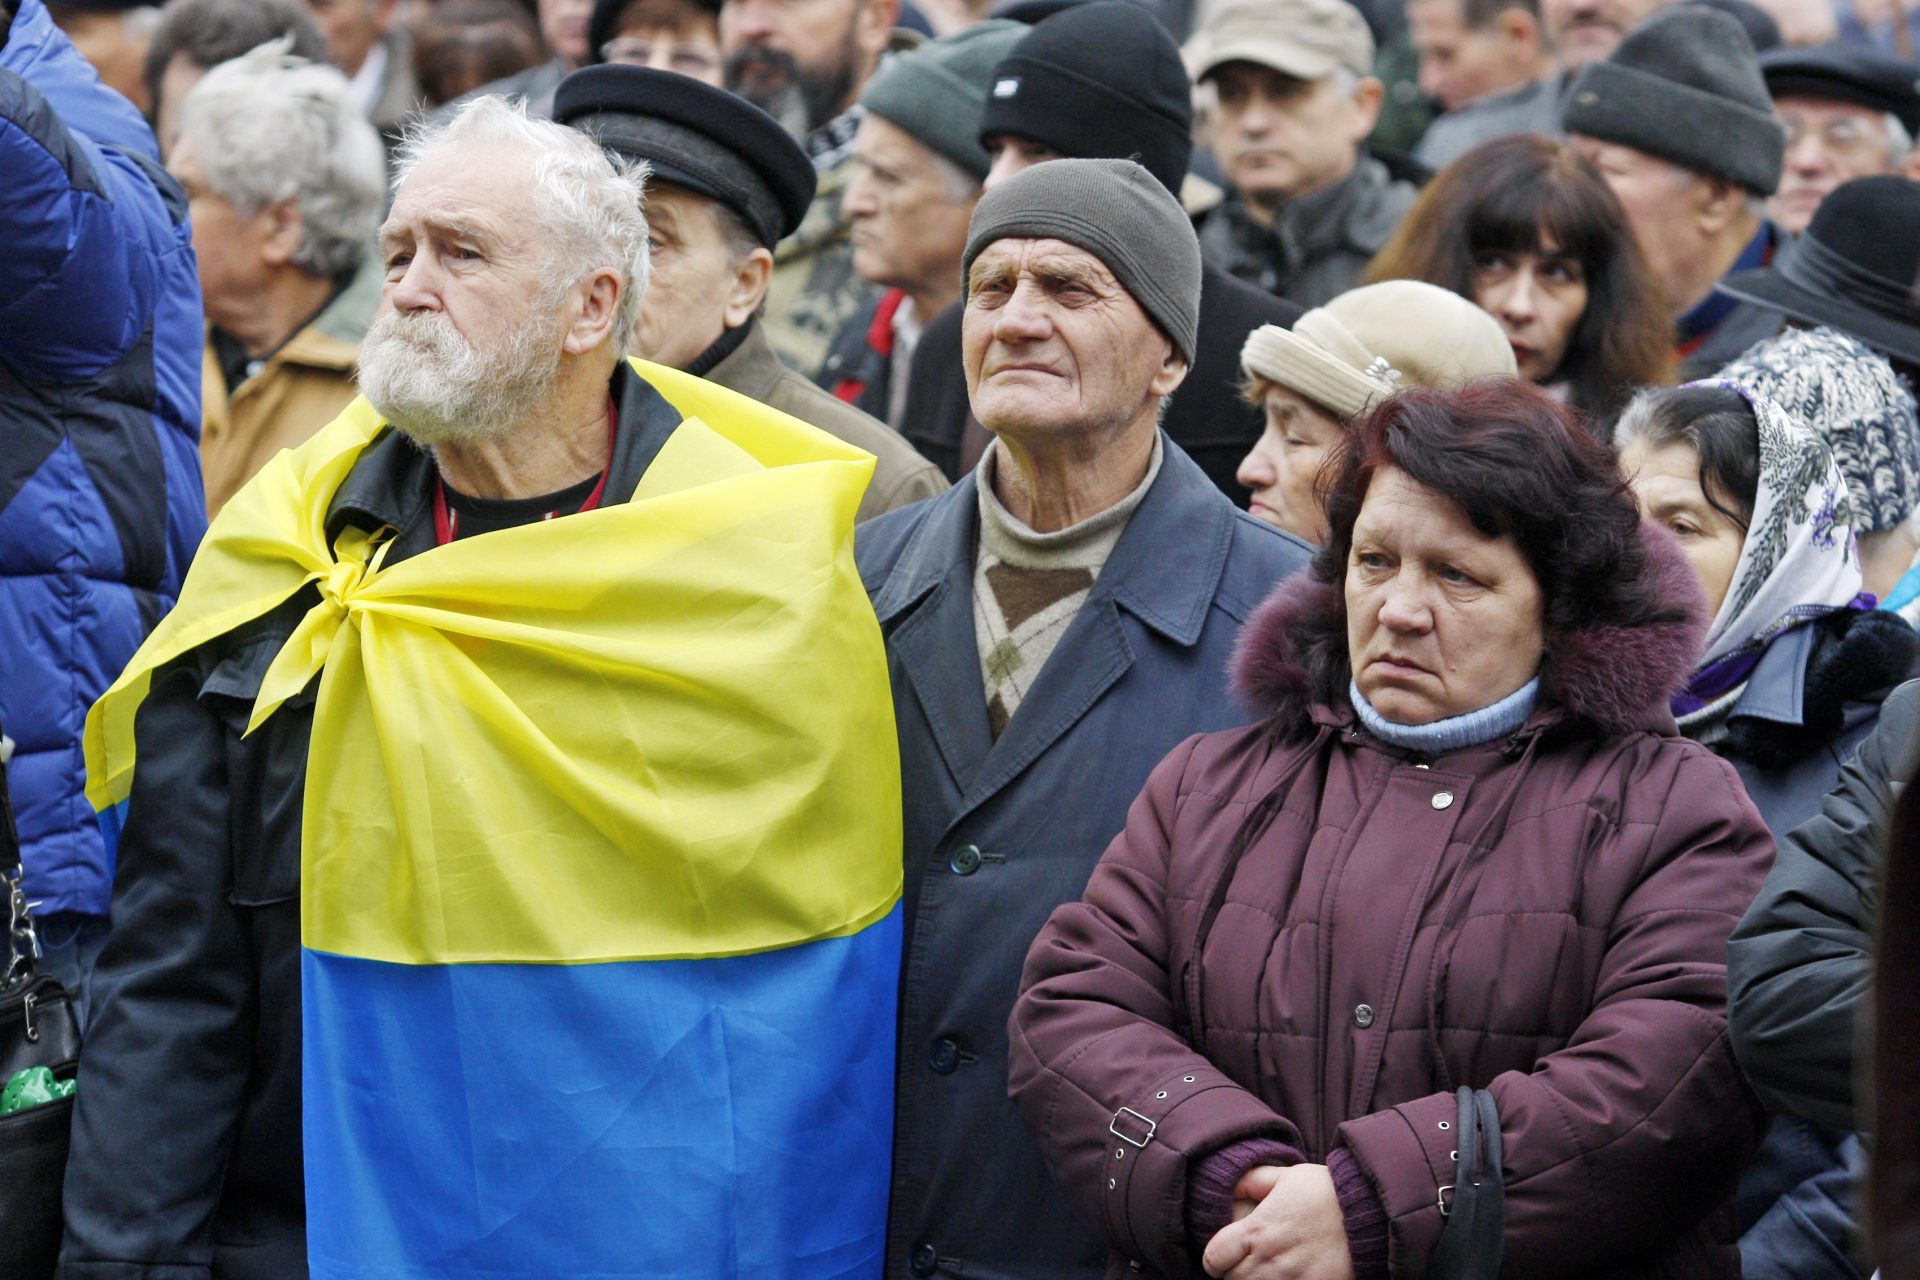 Ukrainian views on corruption in 2015 